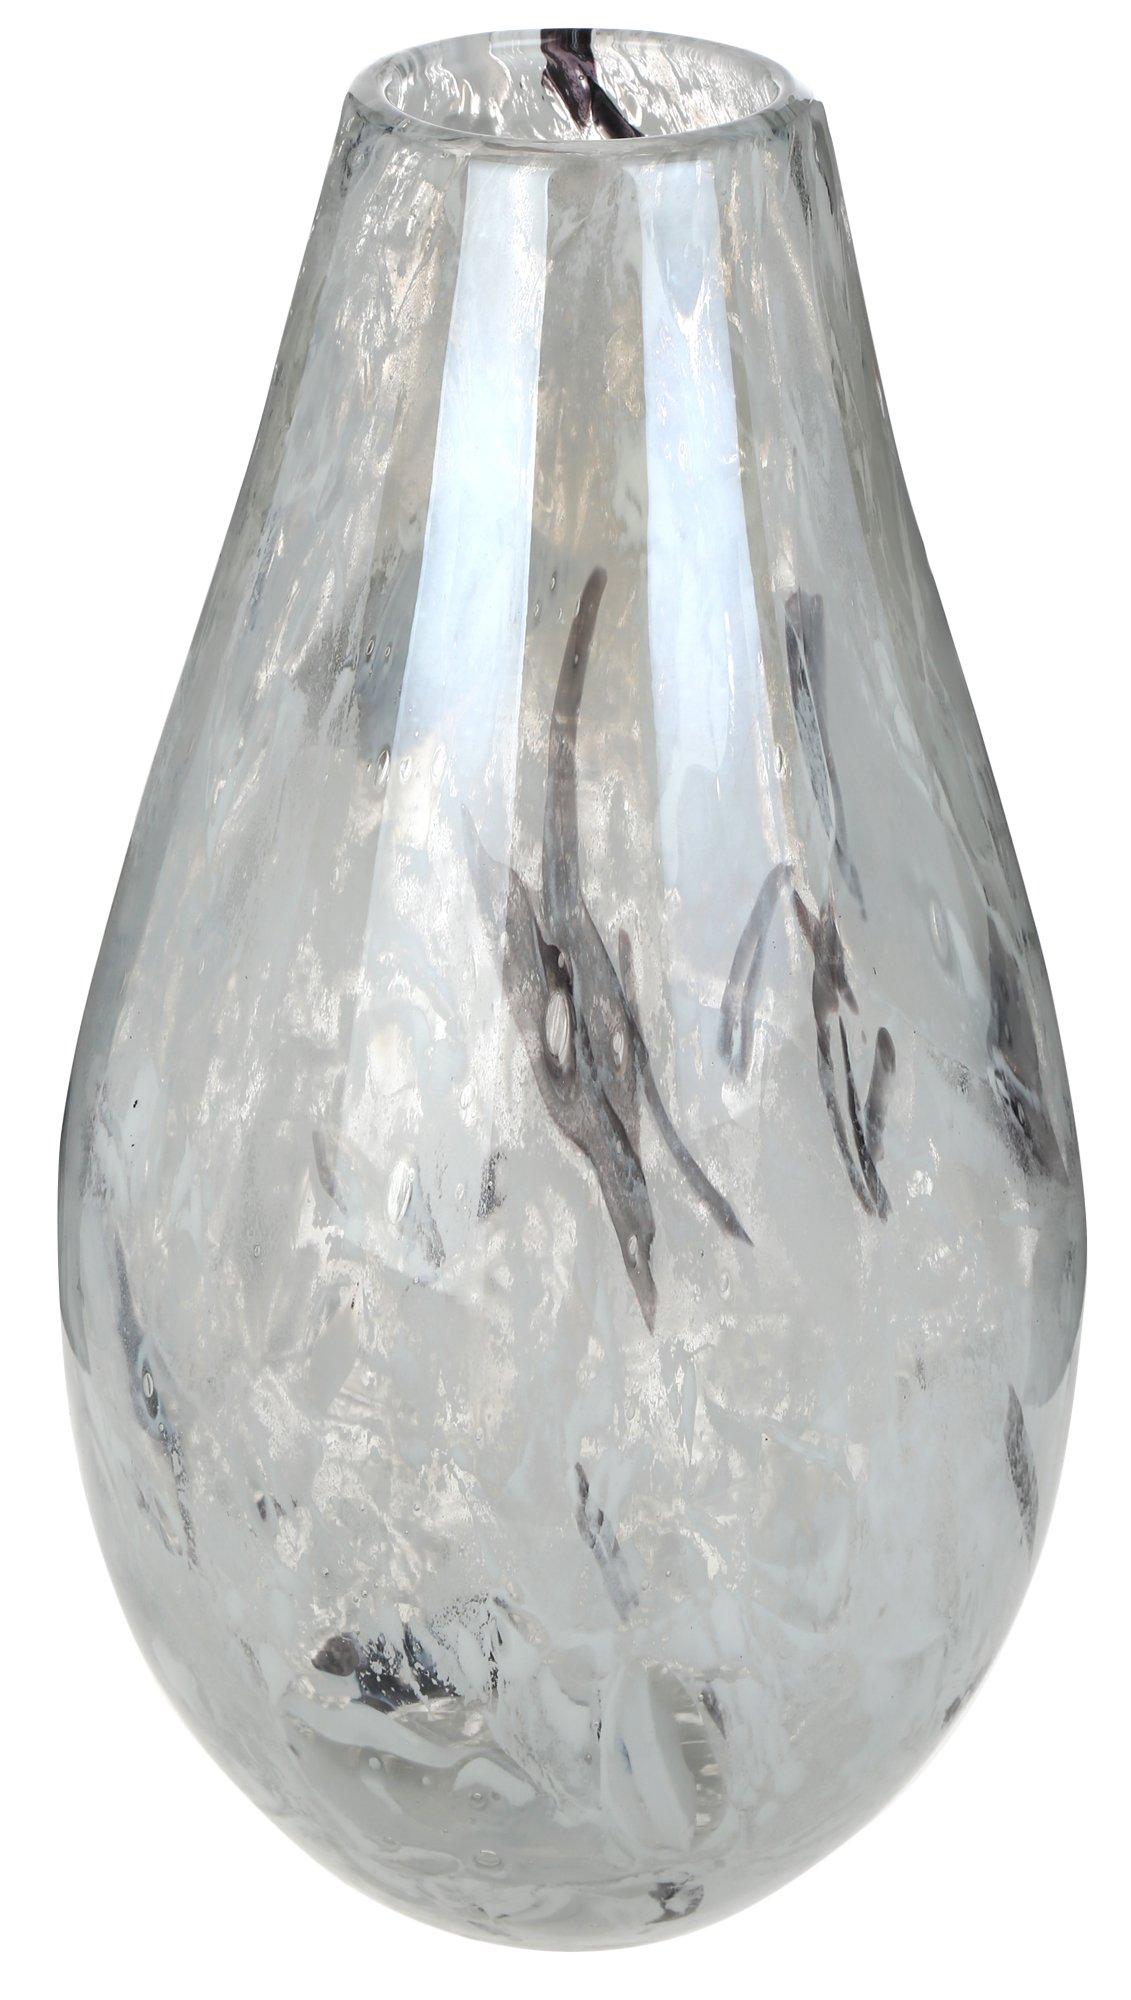 13x7 Decorative Glass Vase